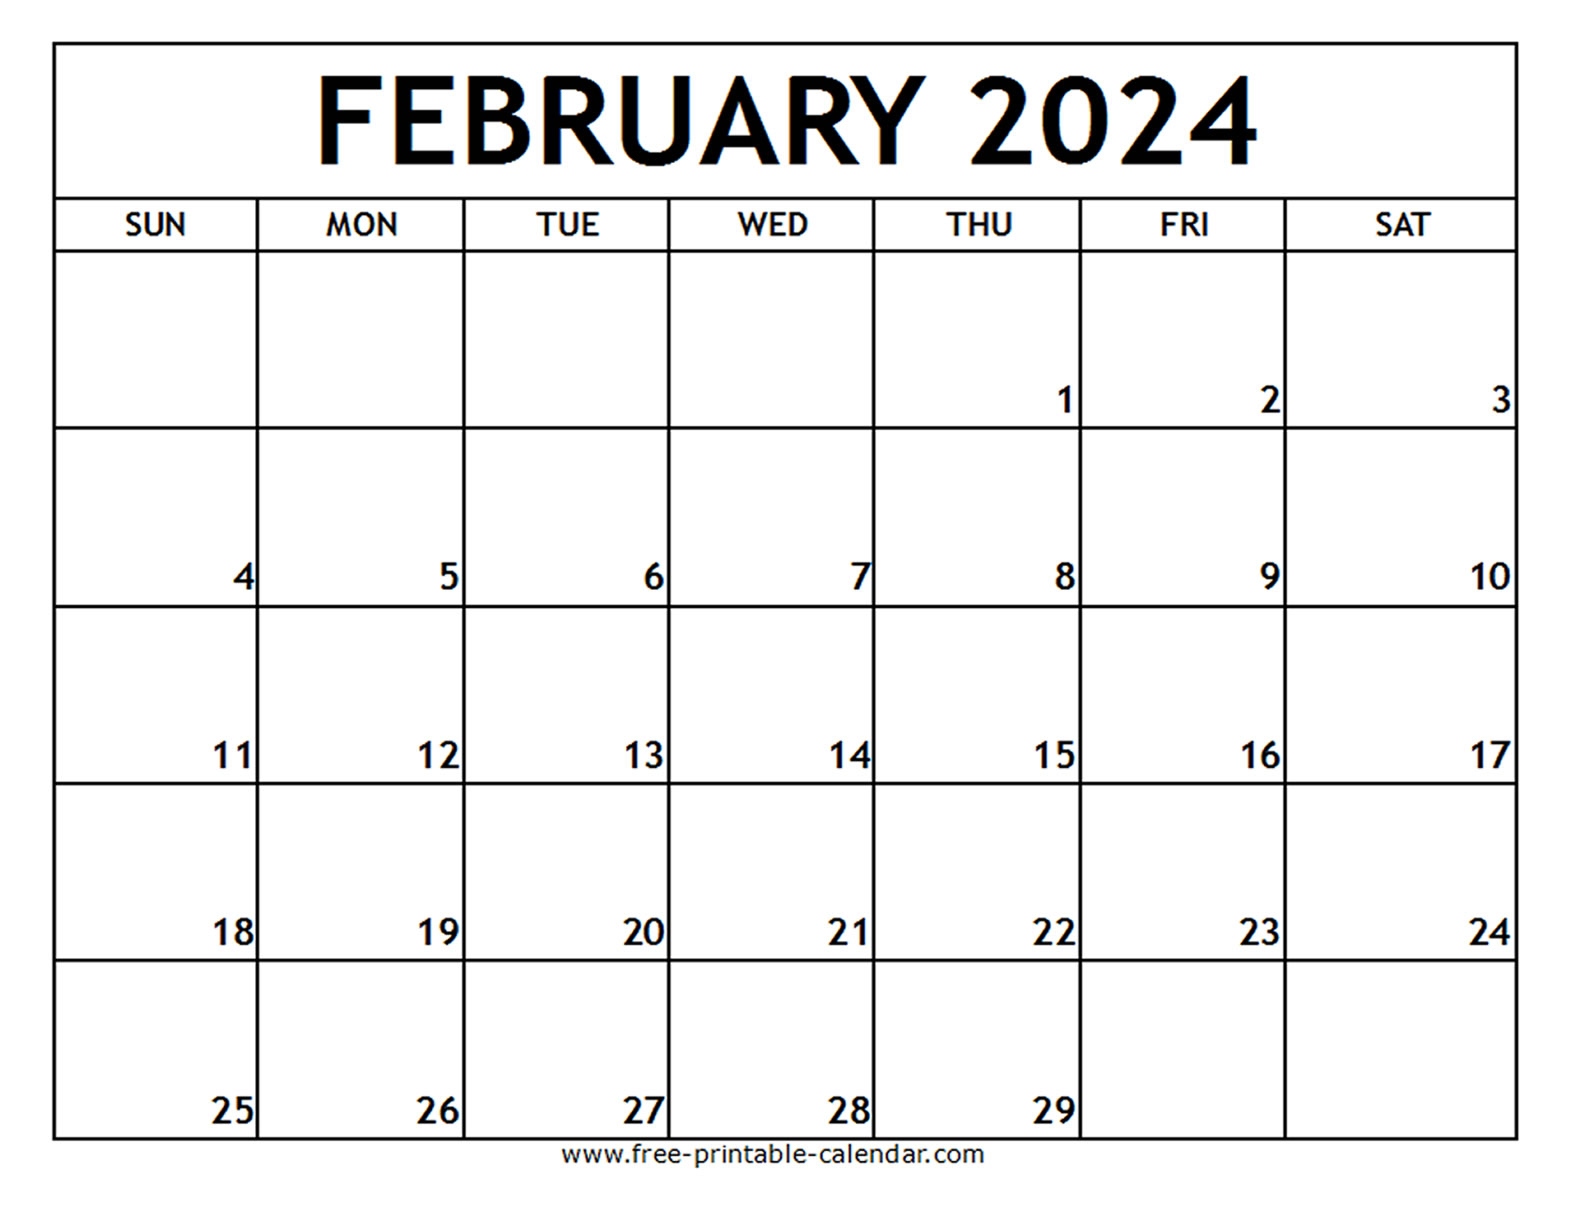 February 2024 Printable Calendar - Free-Printable-Calendar inside Free Printable Blank February 2024 Calendar